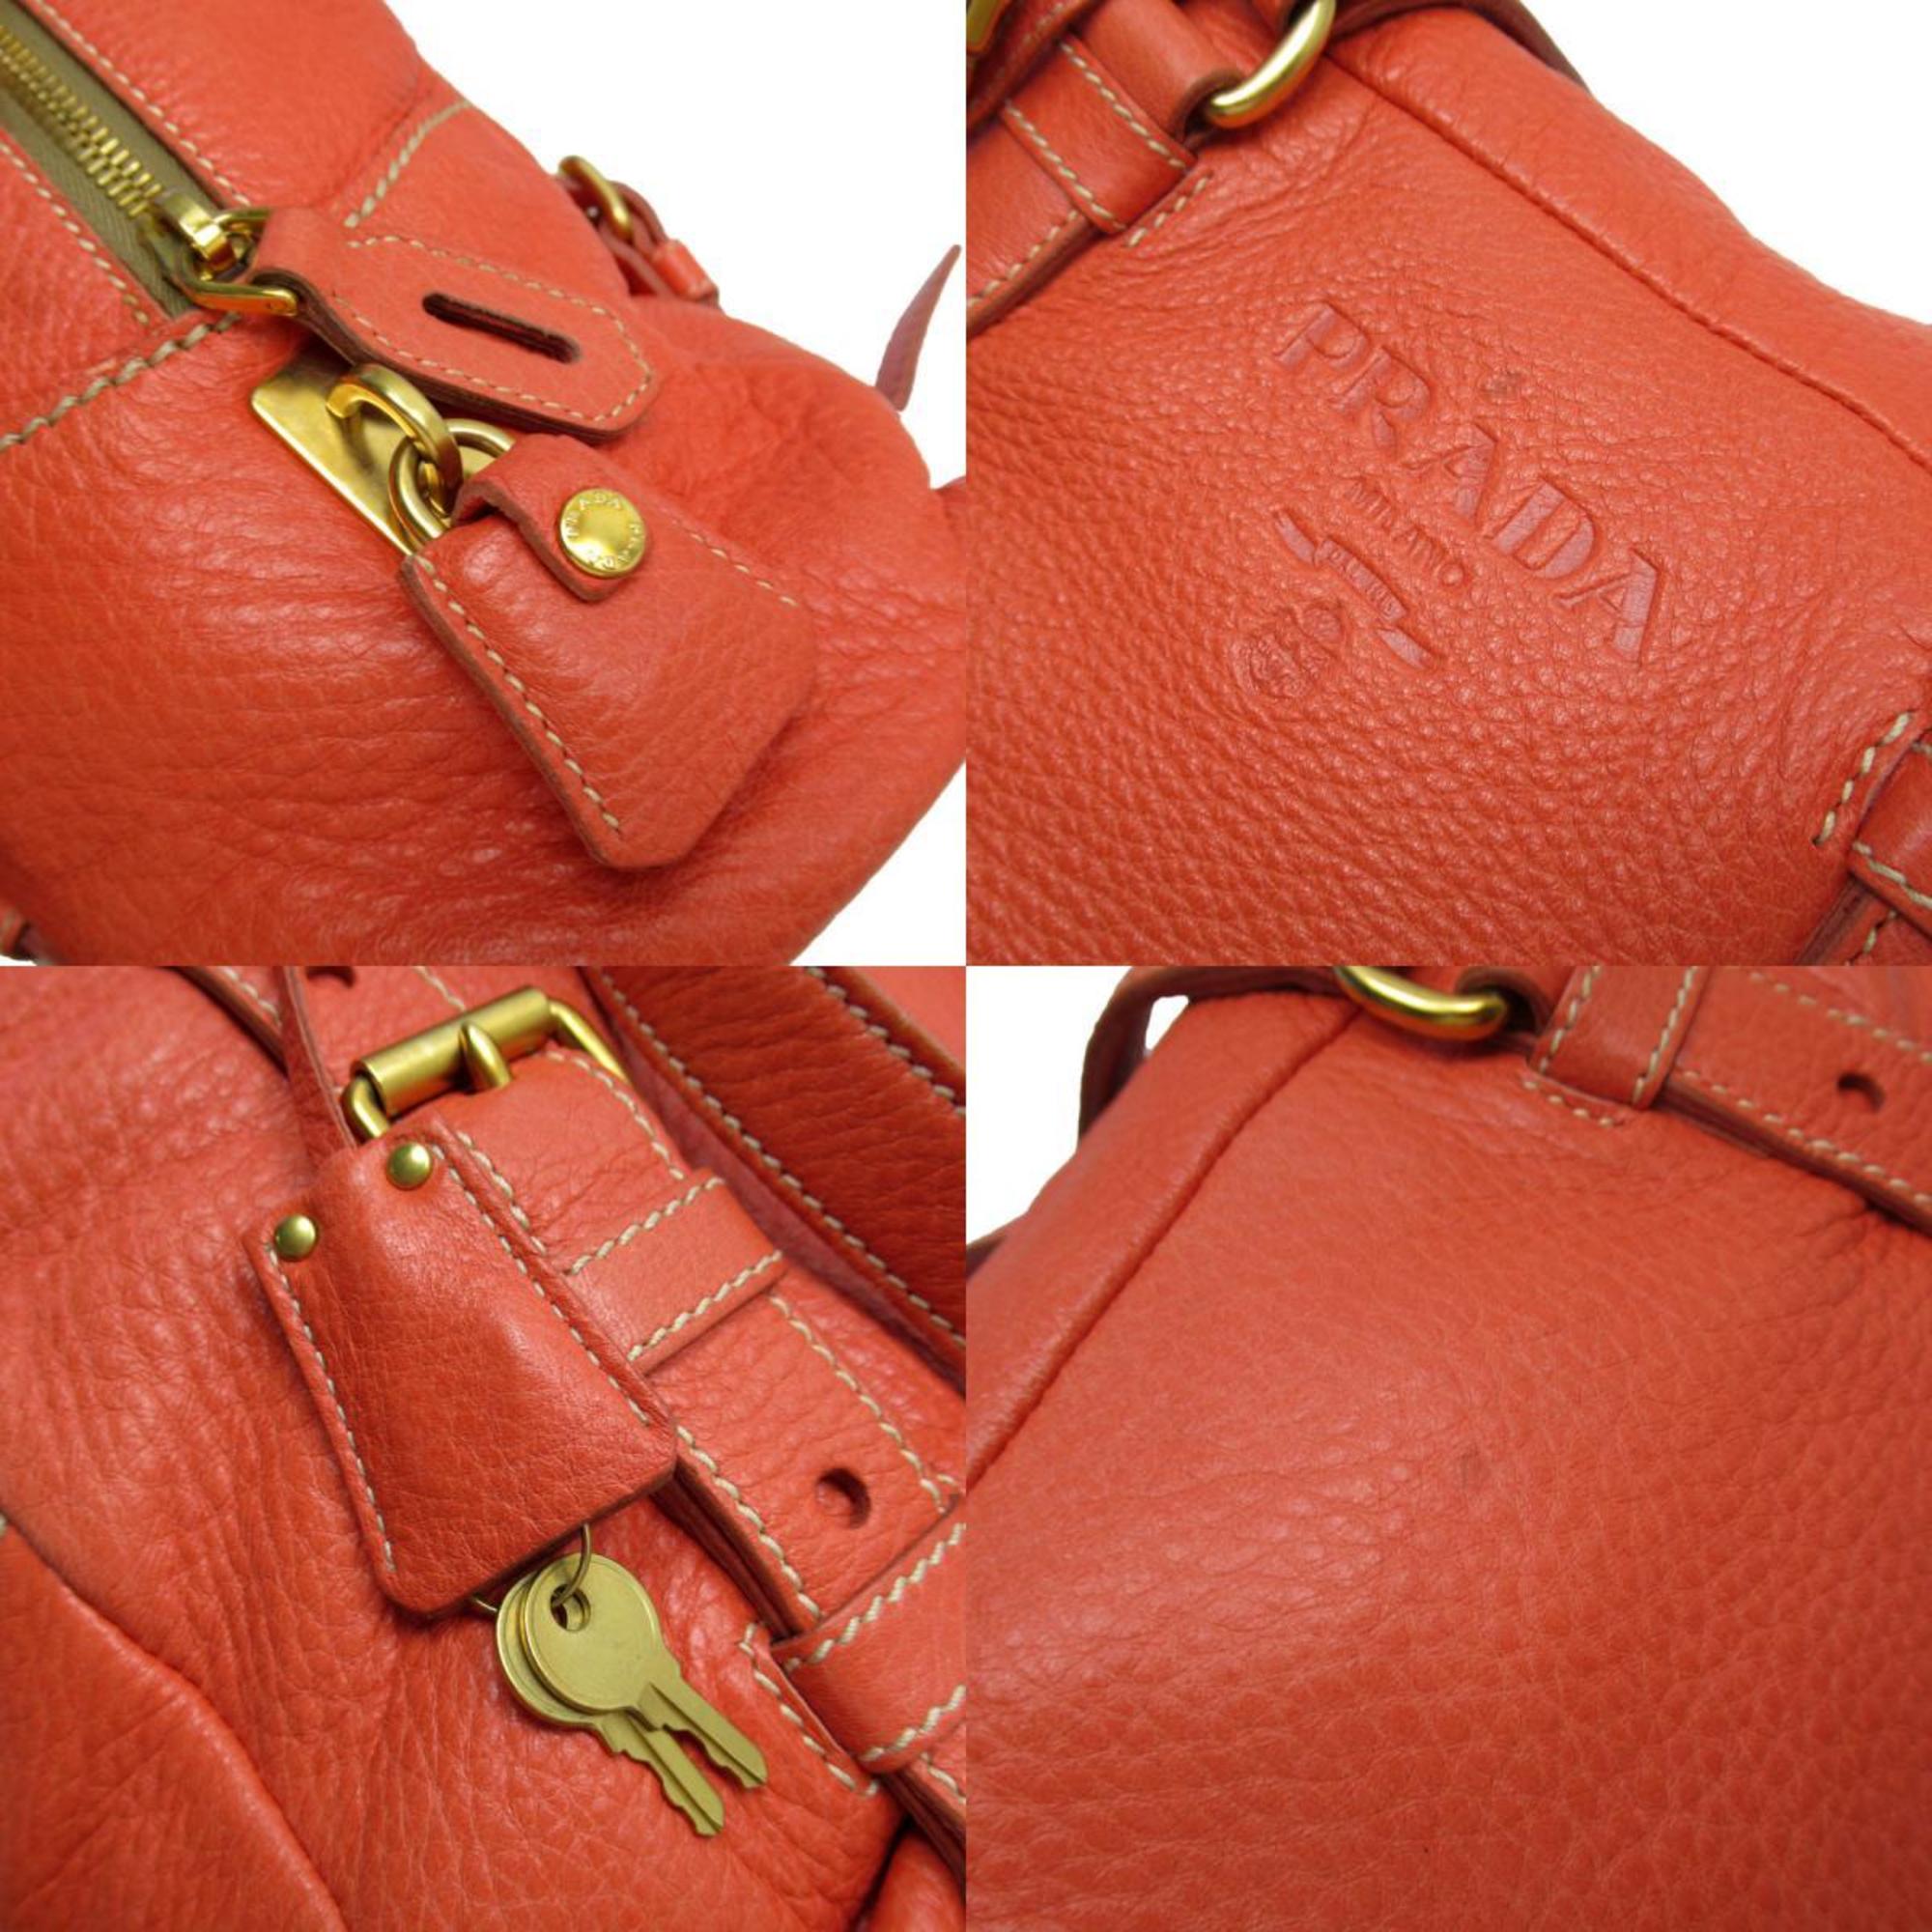 PRADA shoulder bag leather orange gold women's w0166a